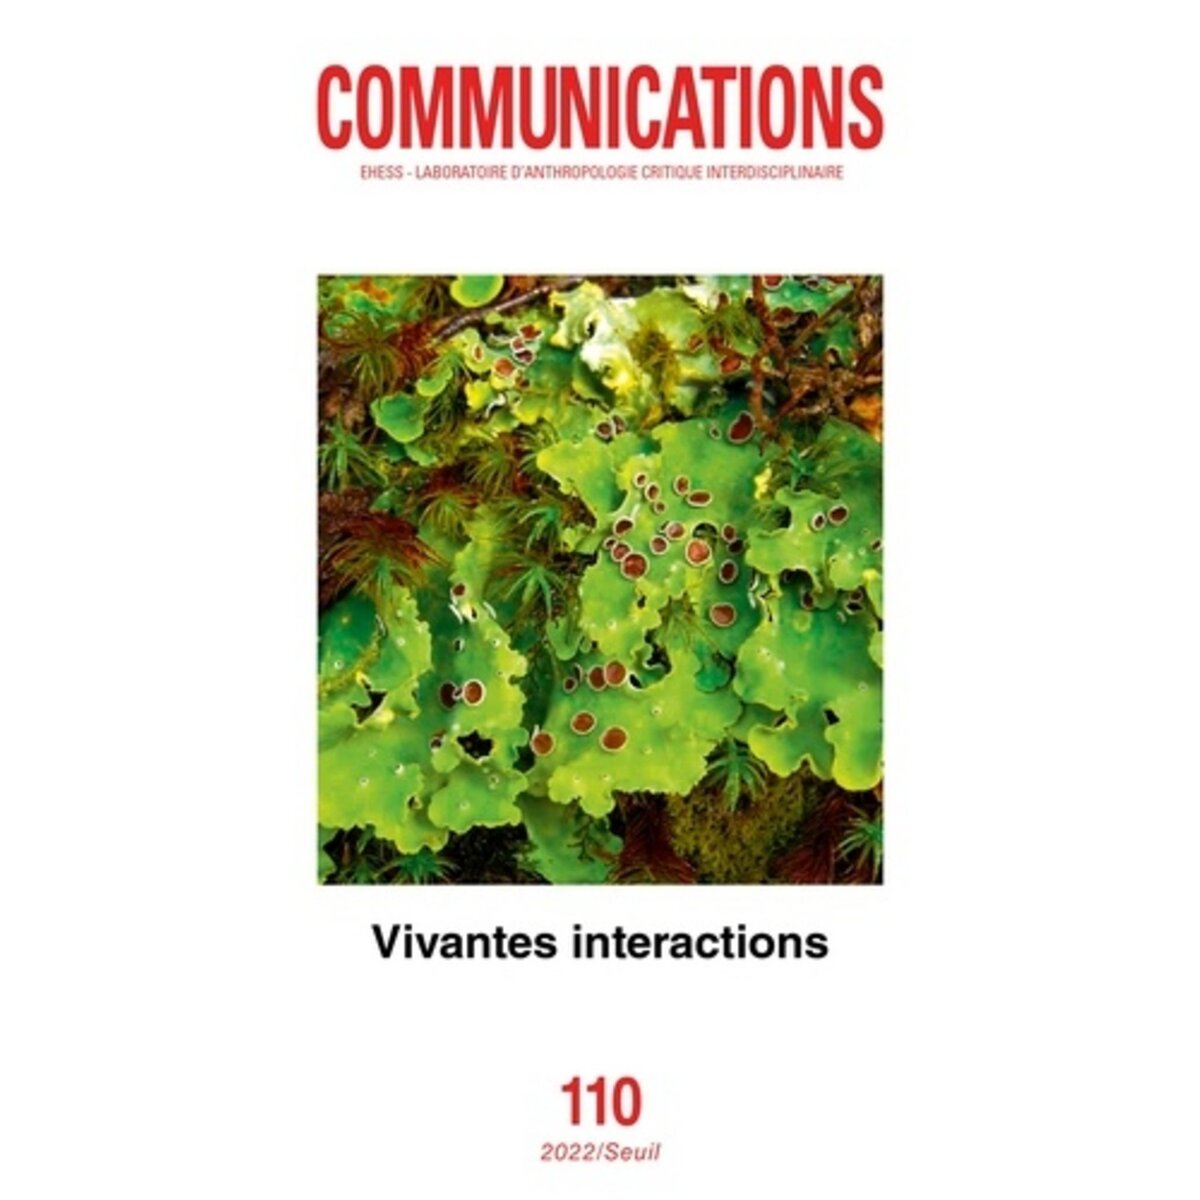  COMMUNICATIONS N° 110 : VIVANTES INTERACTIONS, Paillard Bernard